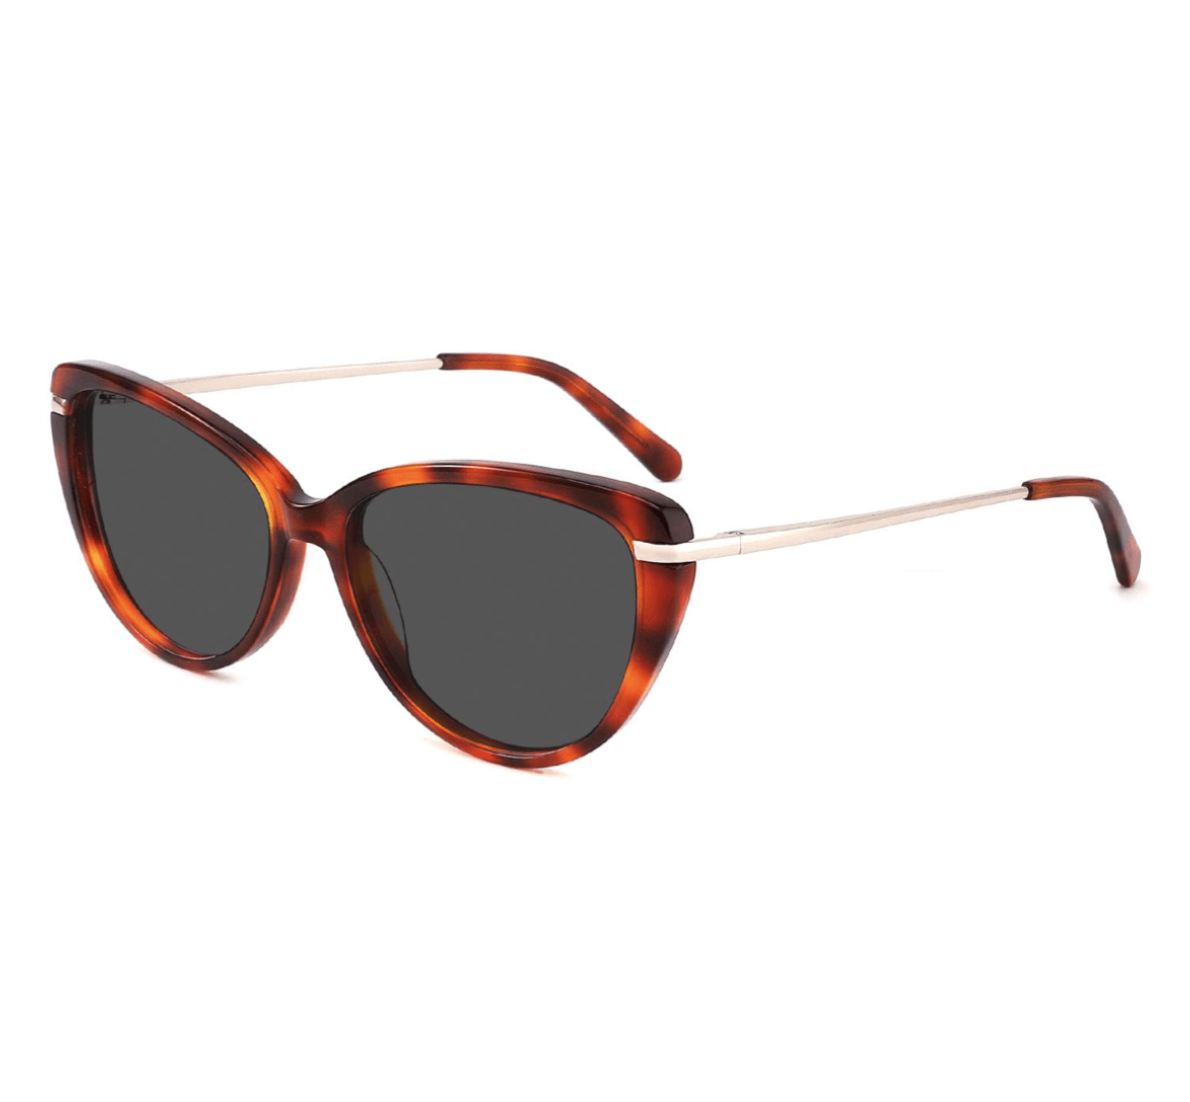 wholesale cat eye sunglasses, cat eye sunglasses for womens, Sunglasses Manufacturer in China, sunglasses supplier